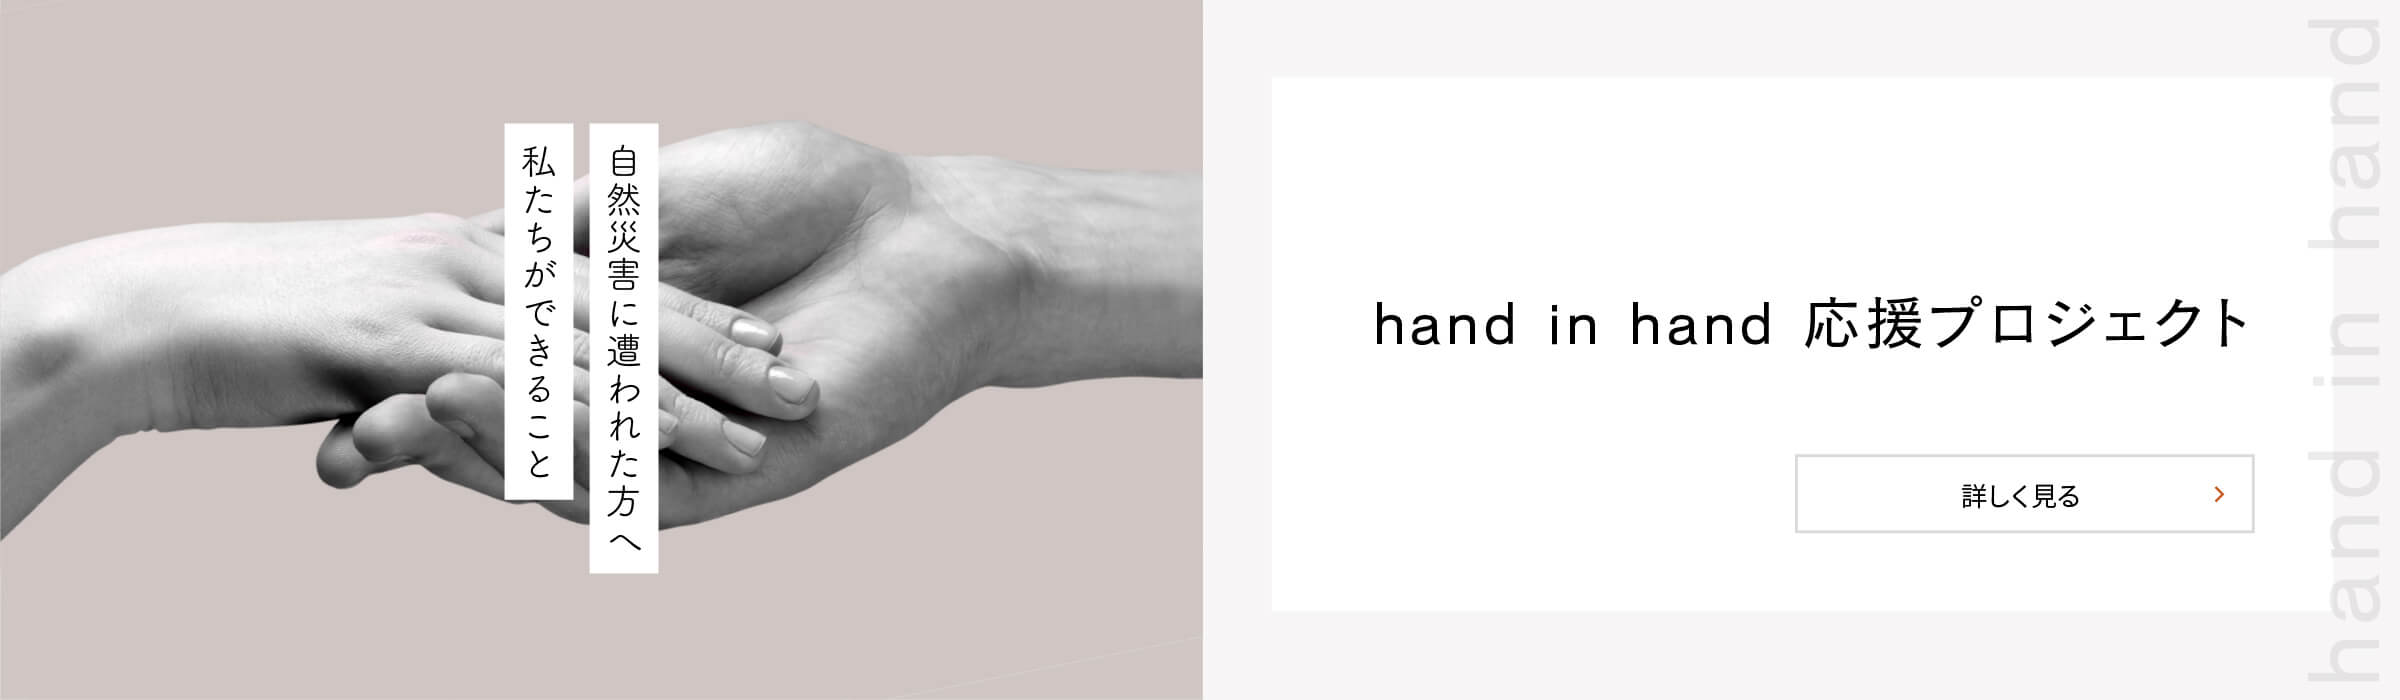 hand in hand 応援プロジェクト